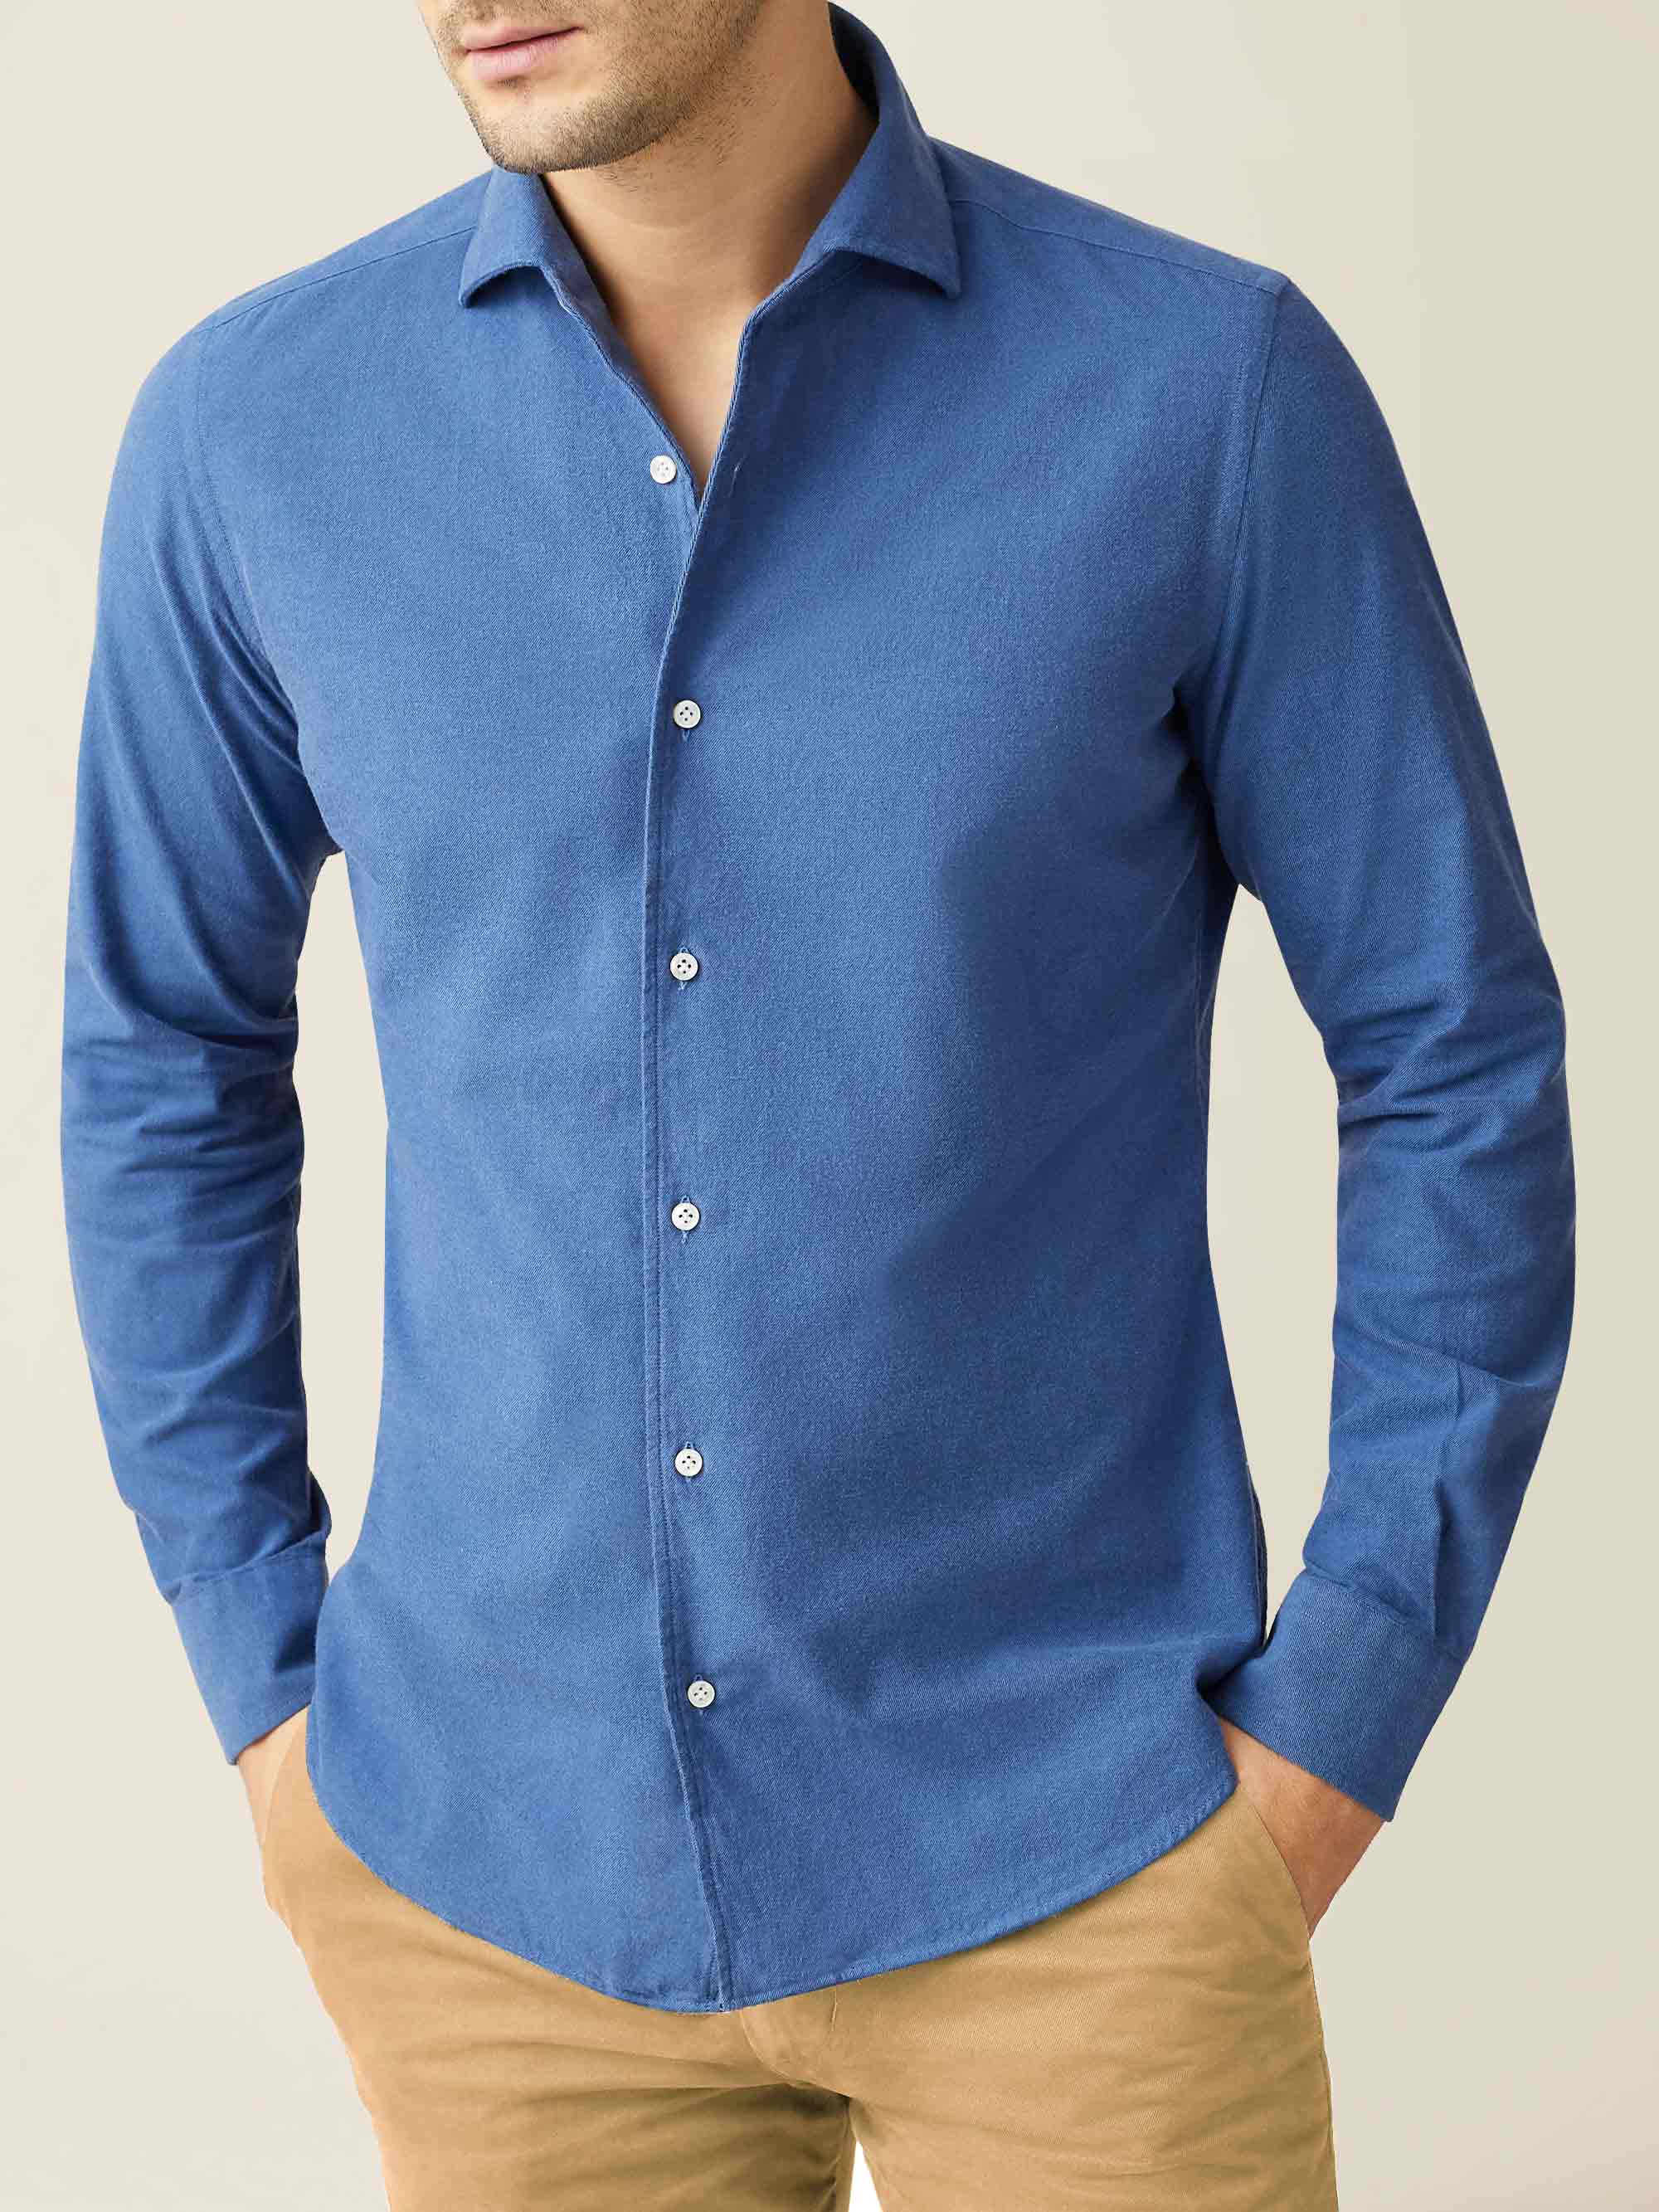 Chambray Blue Brushed Cotton Shirt product